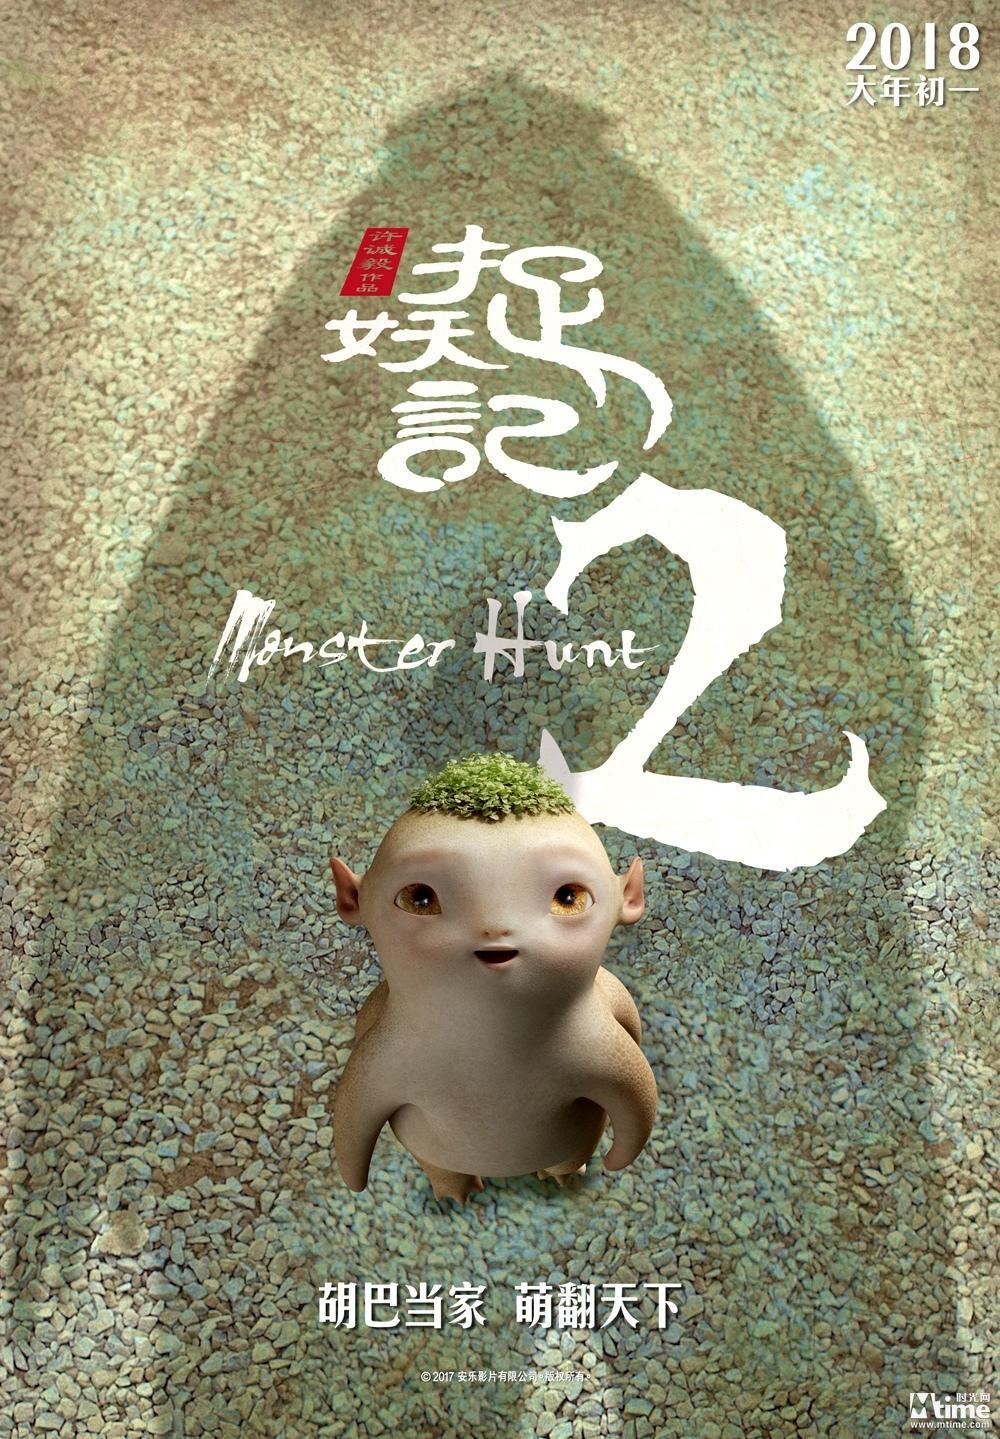 Постер фильма Охота на монстра 2 | Zhuo yao ji 2 